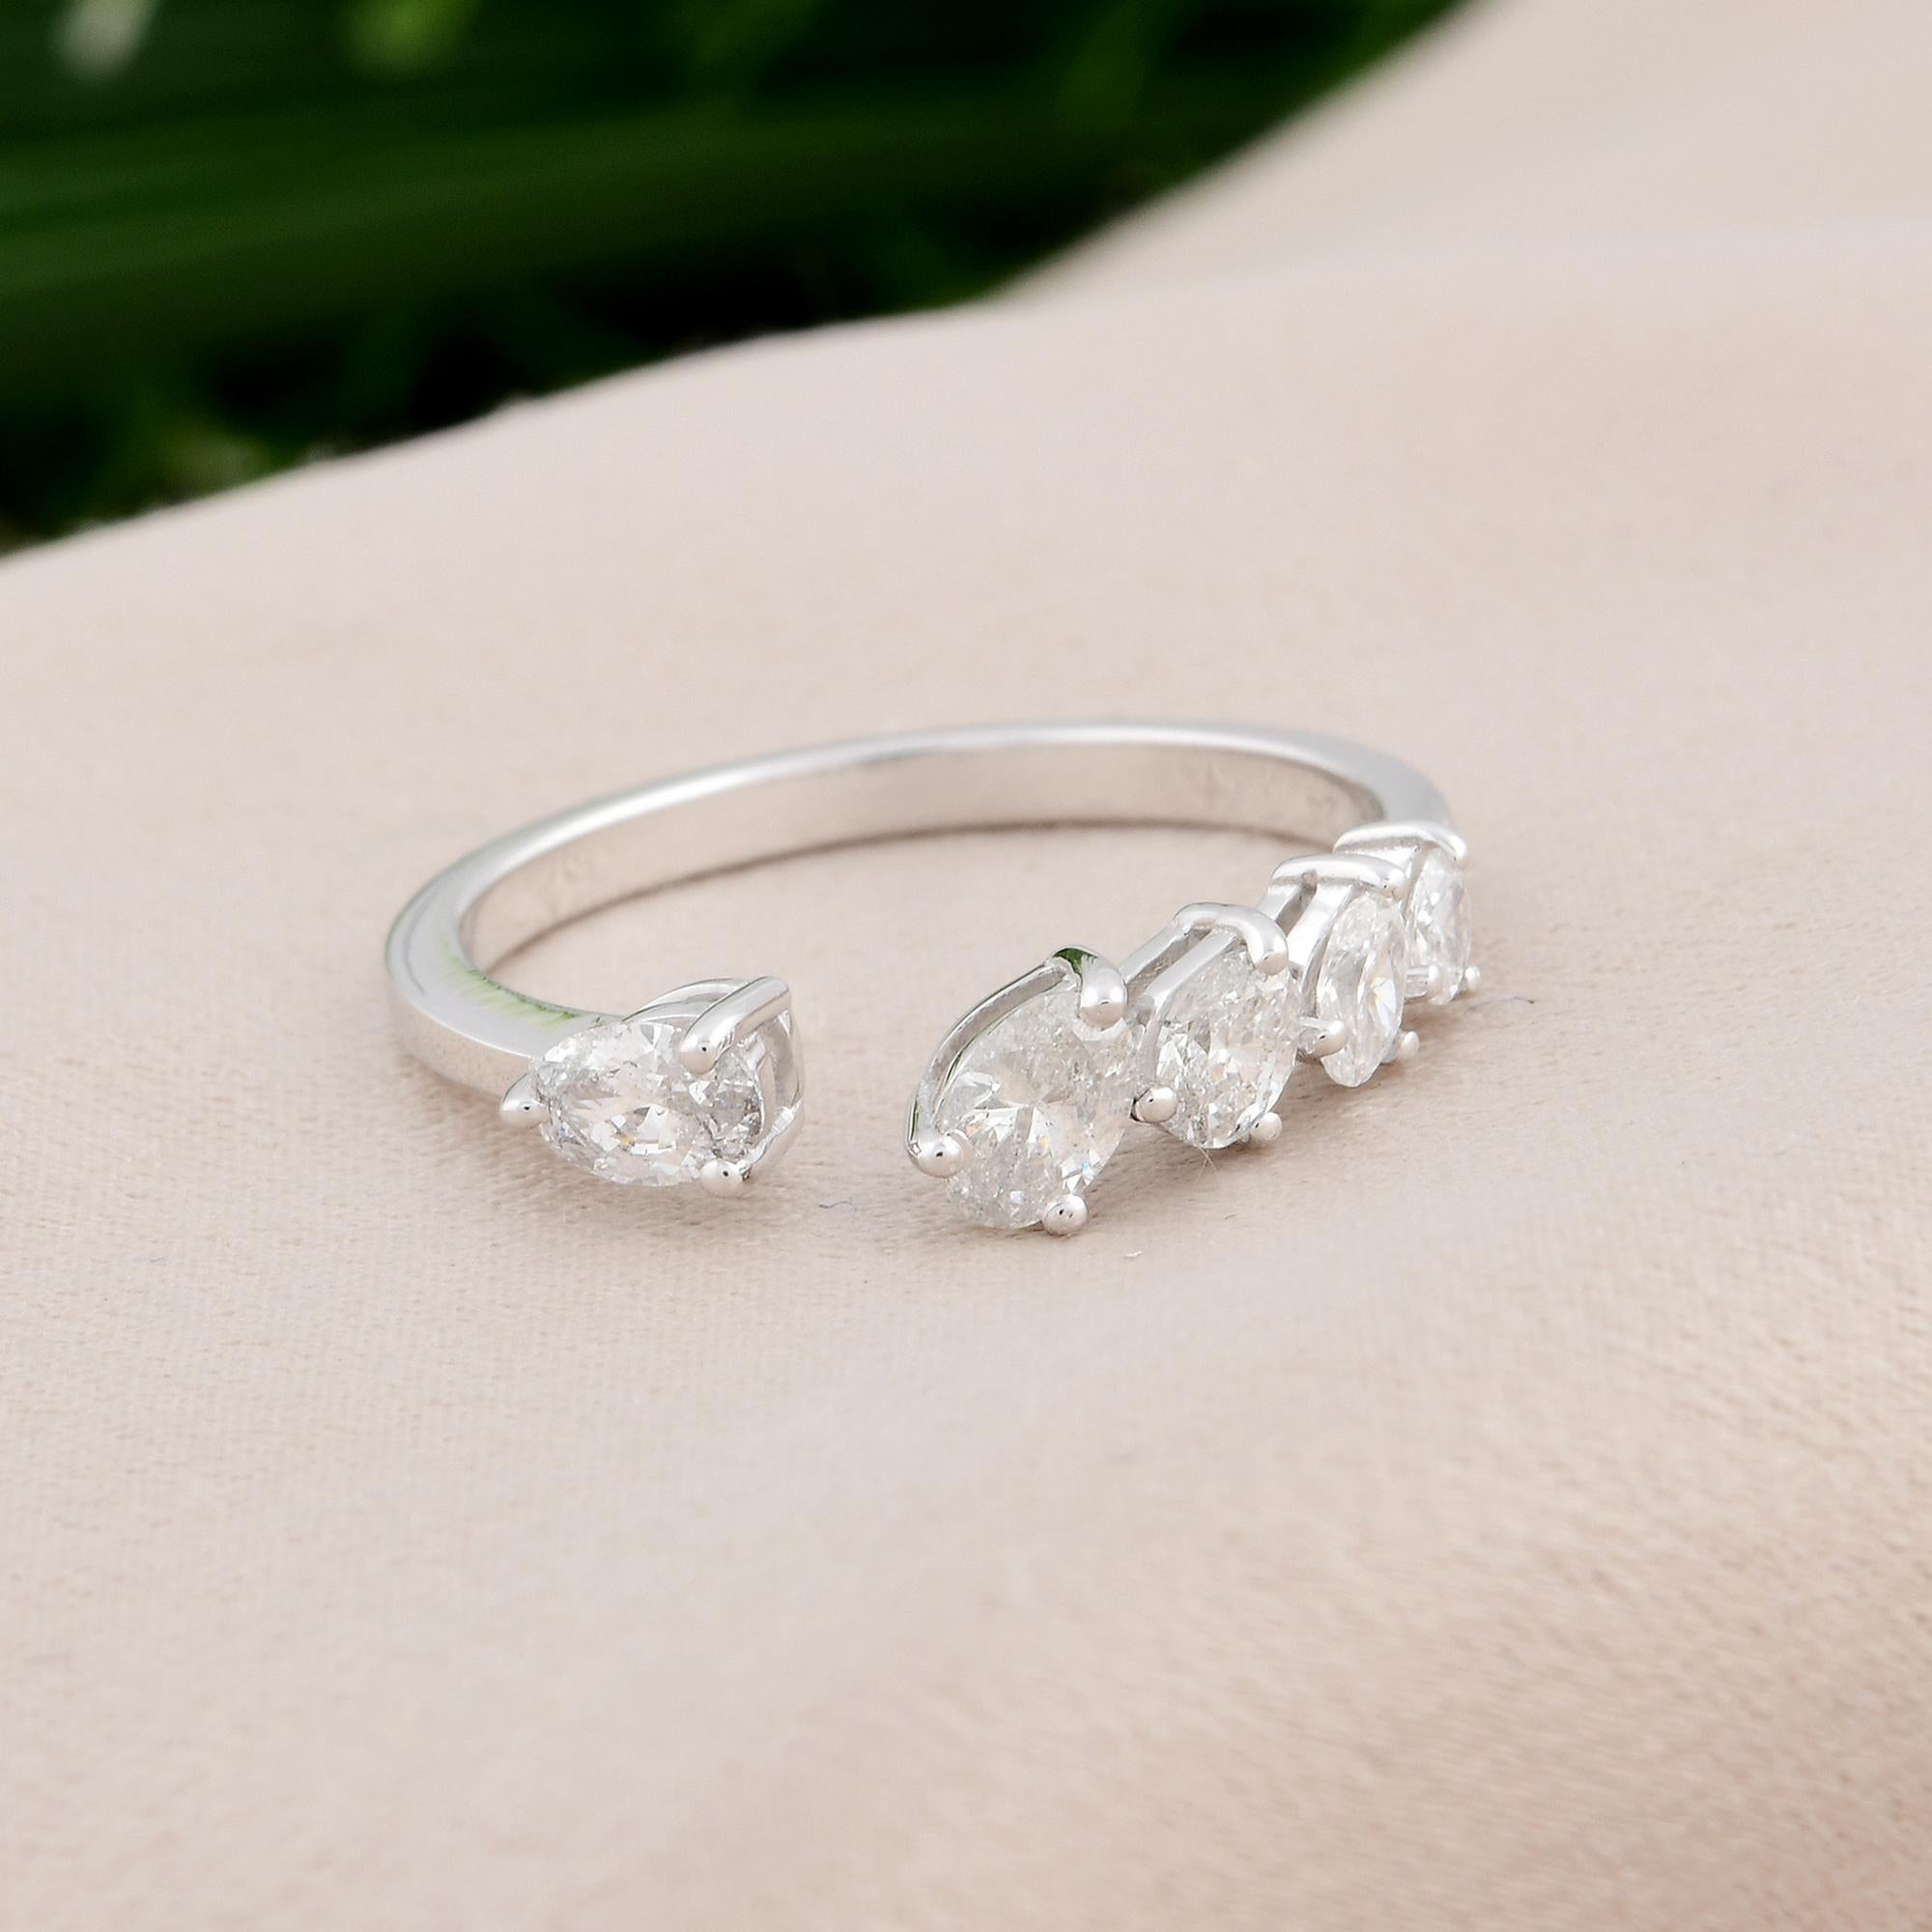 Oval Cut 0.61 Carat Oval Shape Diamond Cuff Ring 14 Karat White Gold Handmade Jewelry For Sale